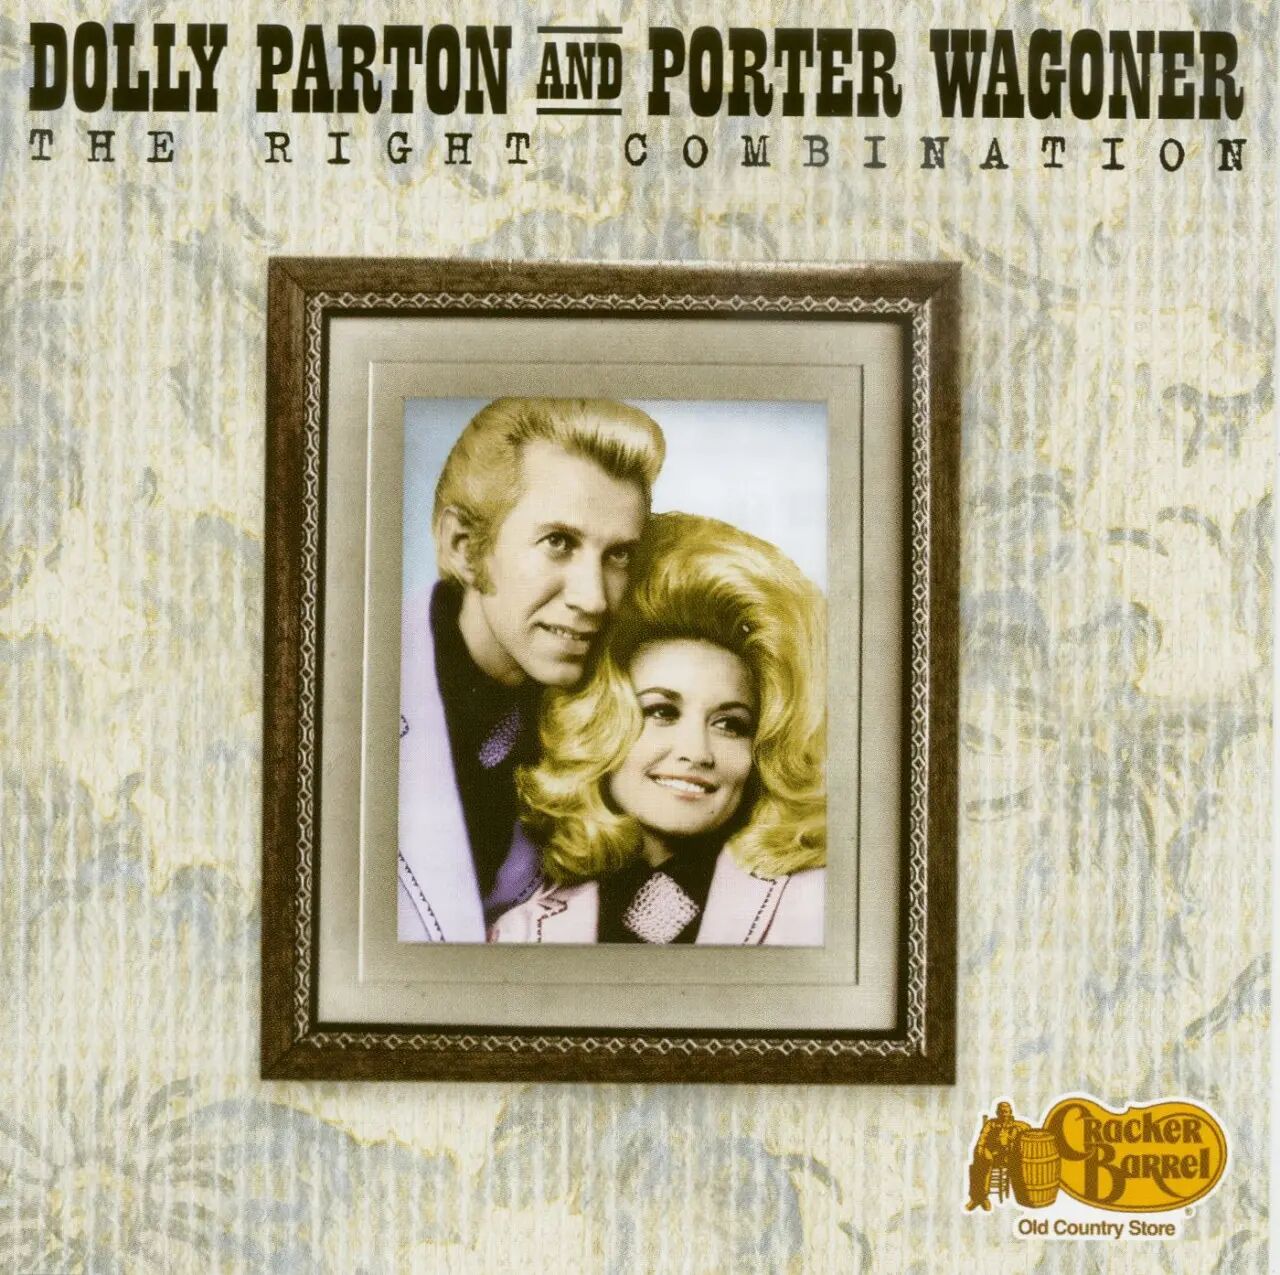 Dolly Parton & Porter Wagoner - Dolly Parton & Porter Wagoner - The Right Combination (CD, Ltd.)